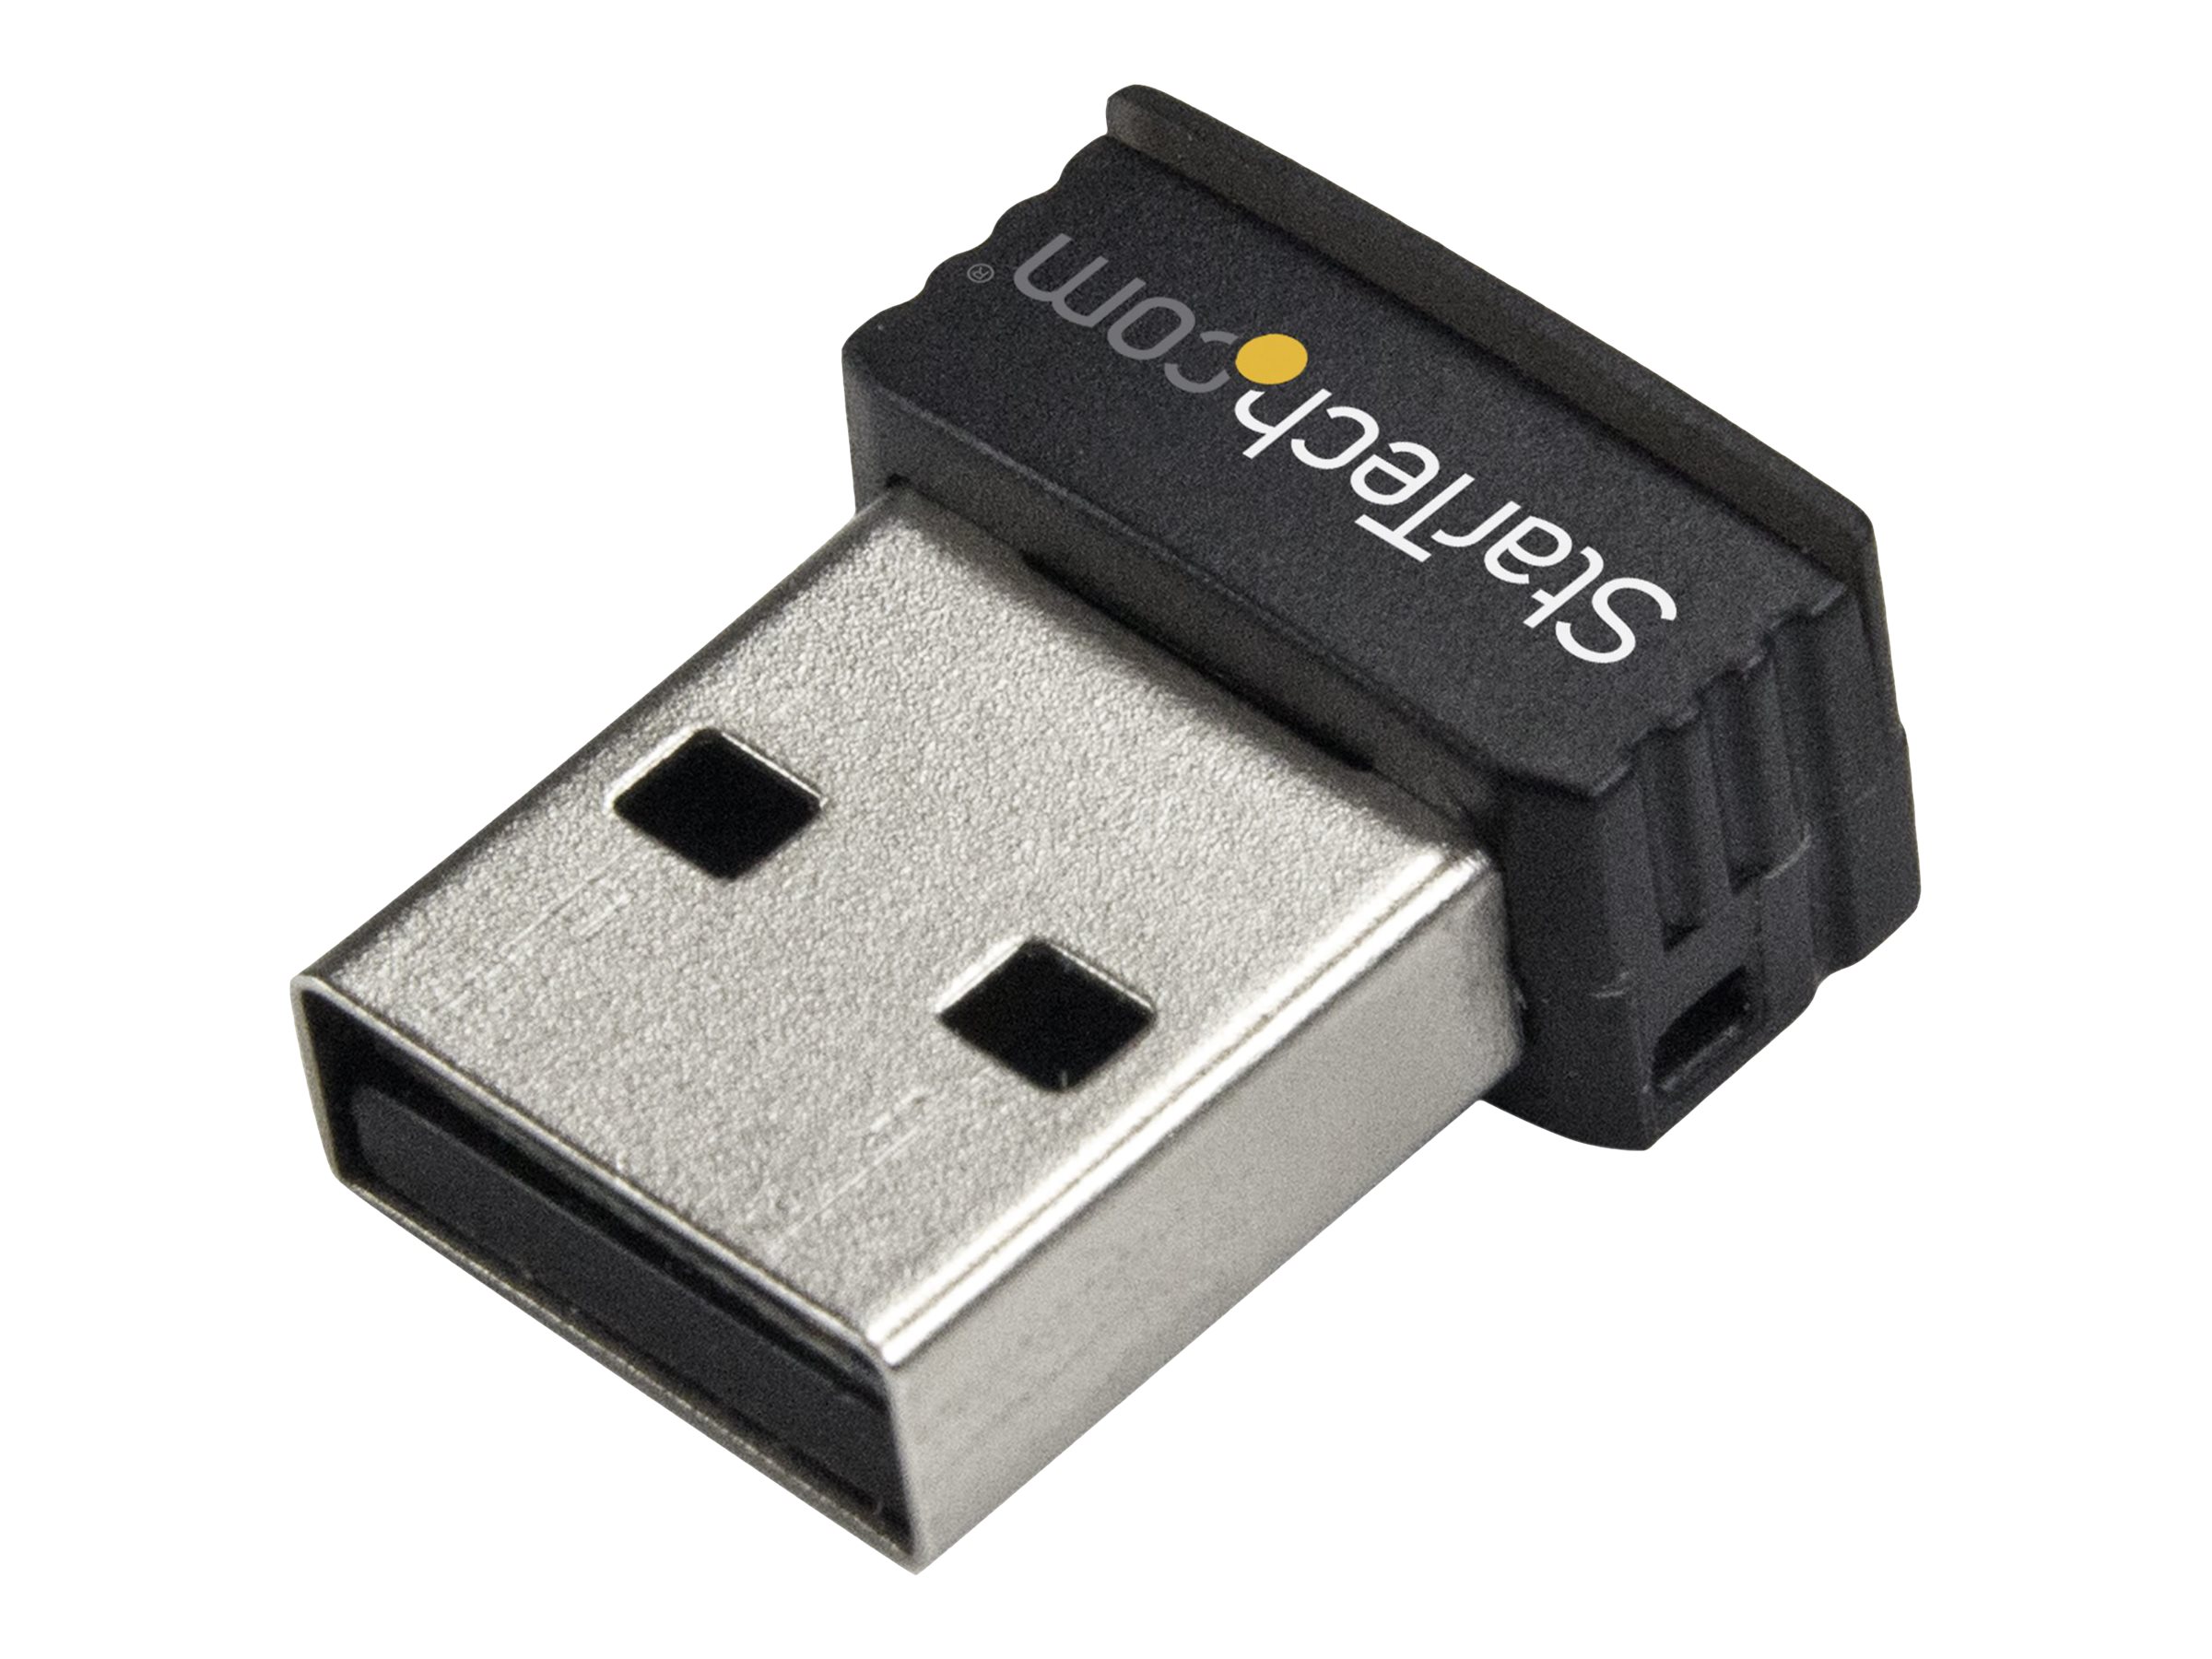 StarTech.com USB 150Mbps Mini Wireless N Network Adapter - 802.11n/g 1T1R (USB150WN1X1) - Netzwerkadapter - USB 2.0 - 802.11b/g/n - Schwarz